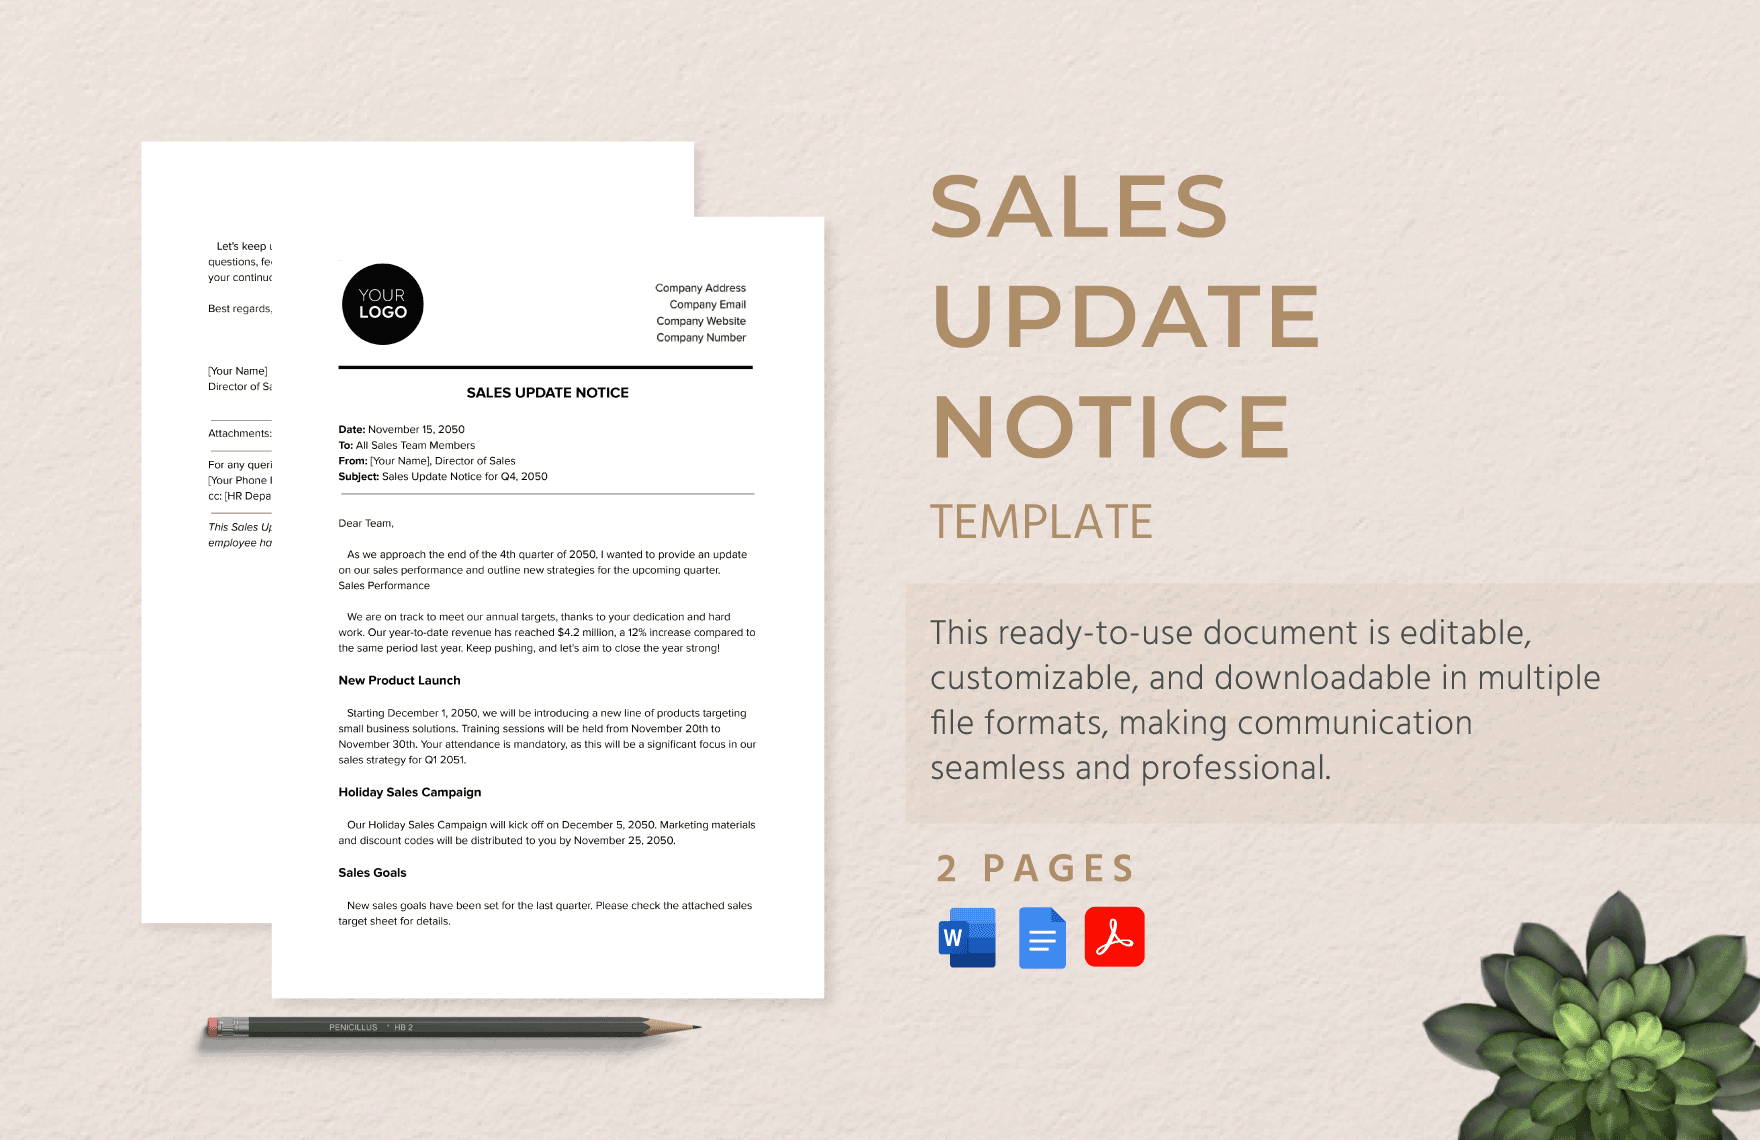 Sales Update Notice Template in Word, Google Docs, PDF